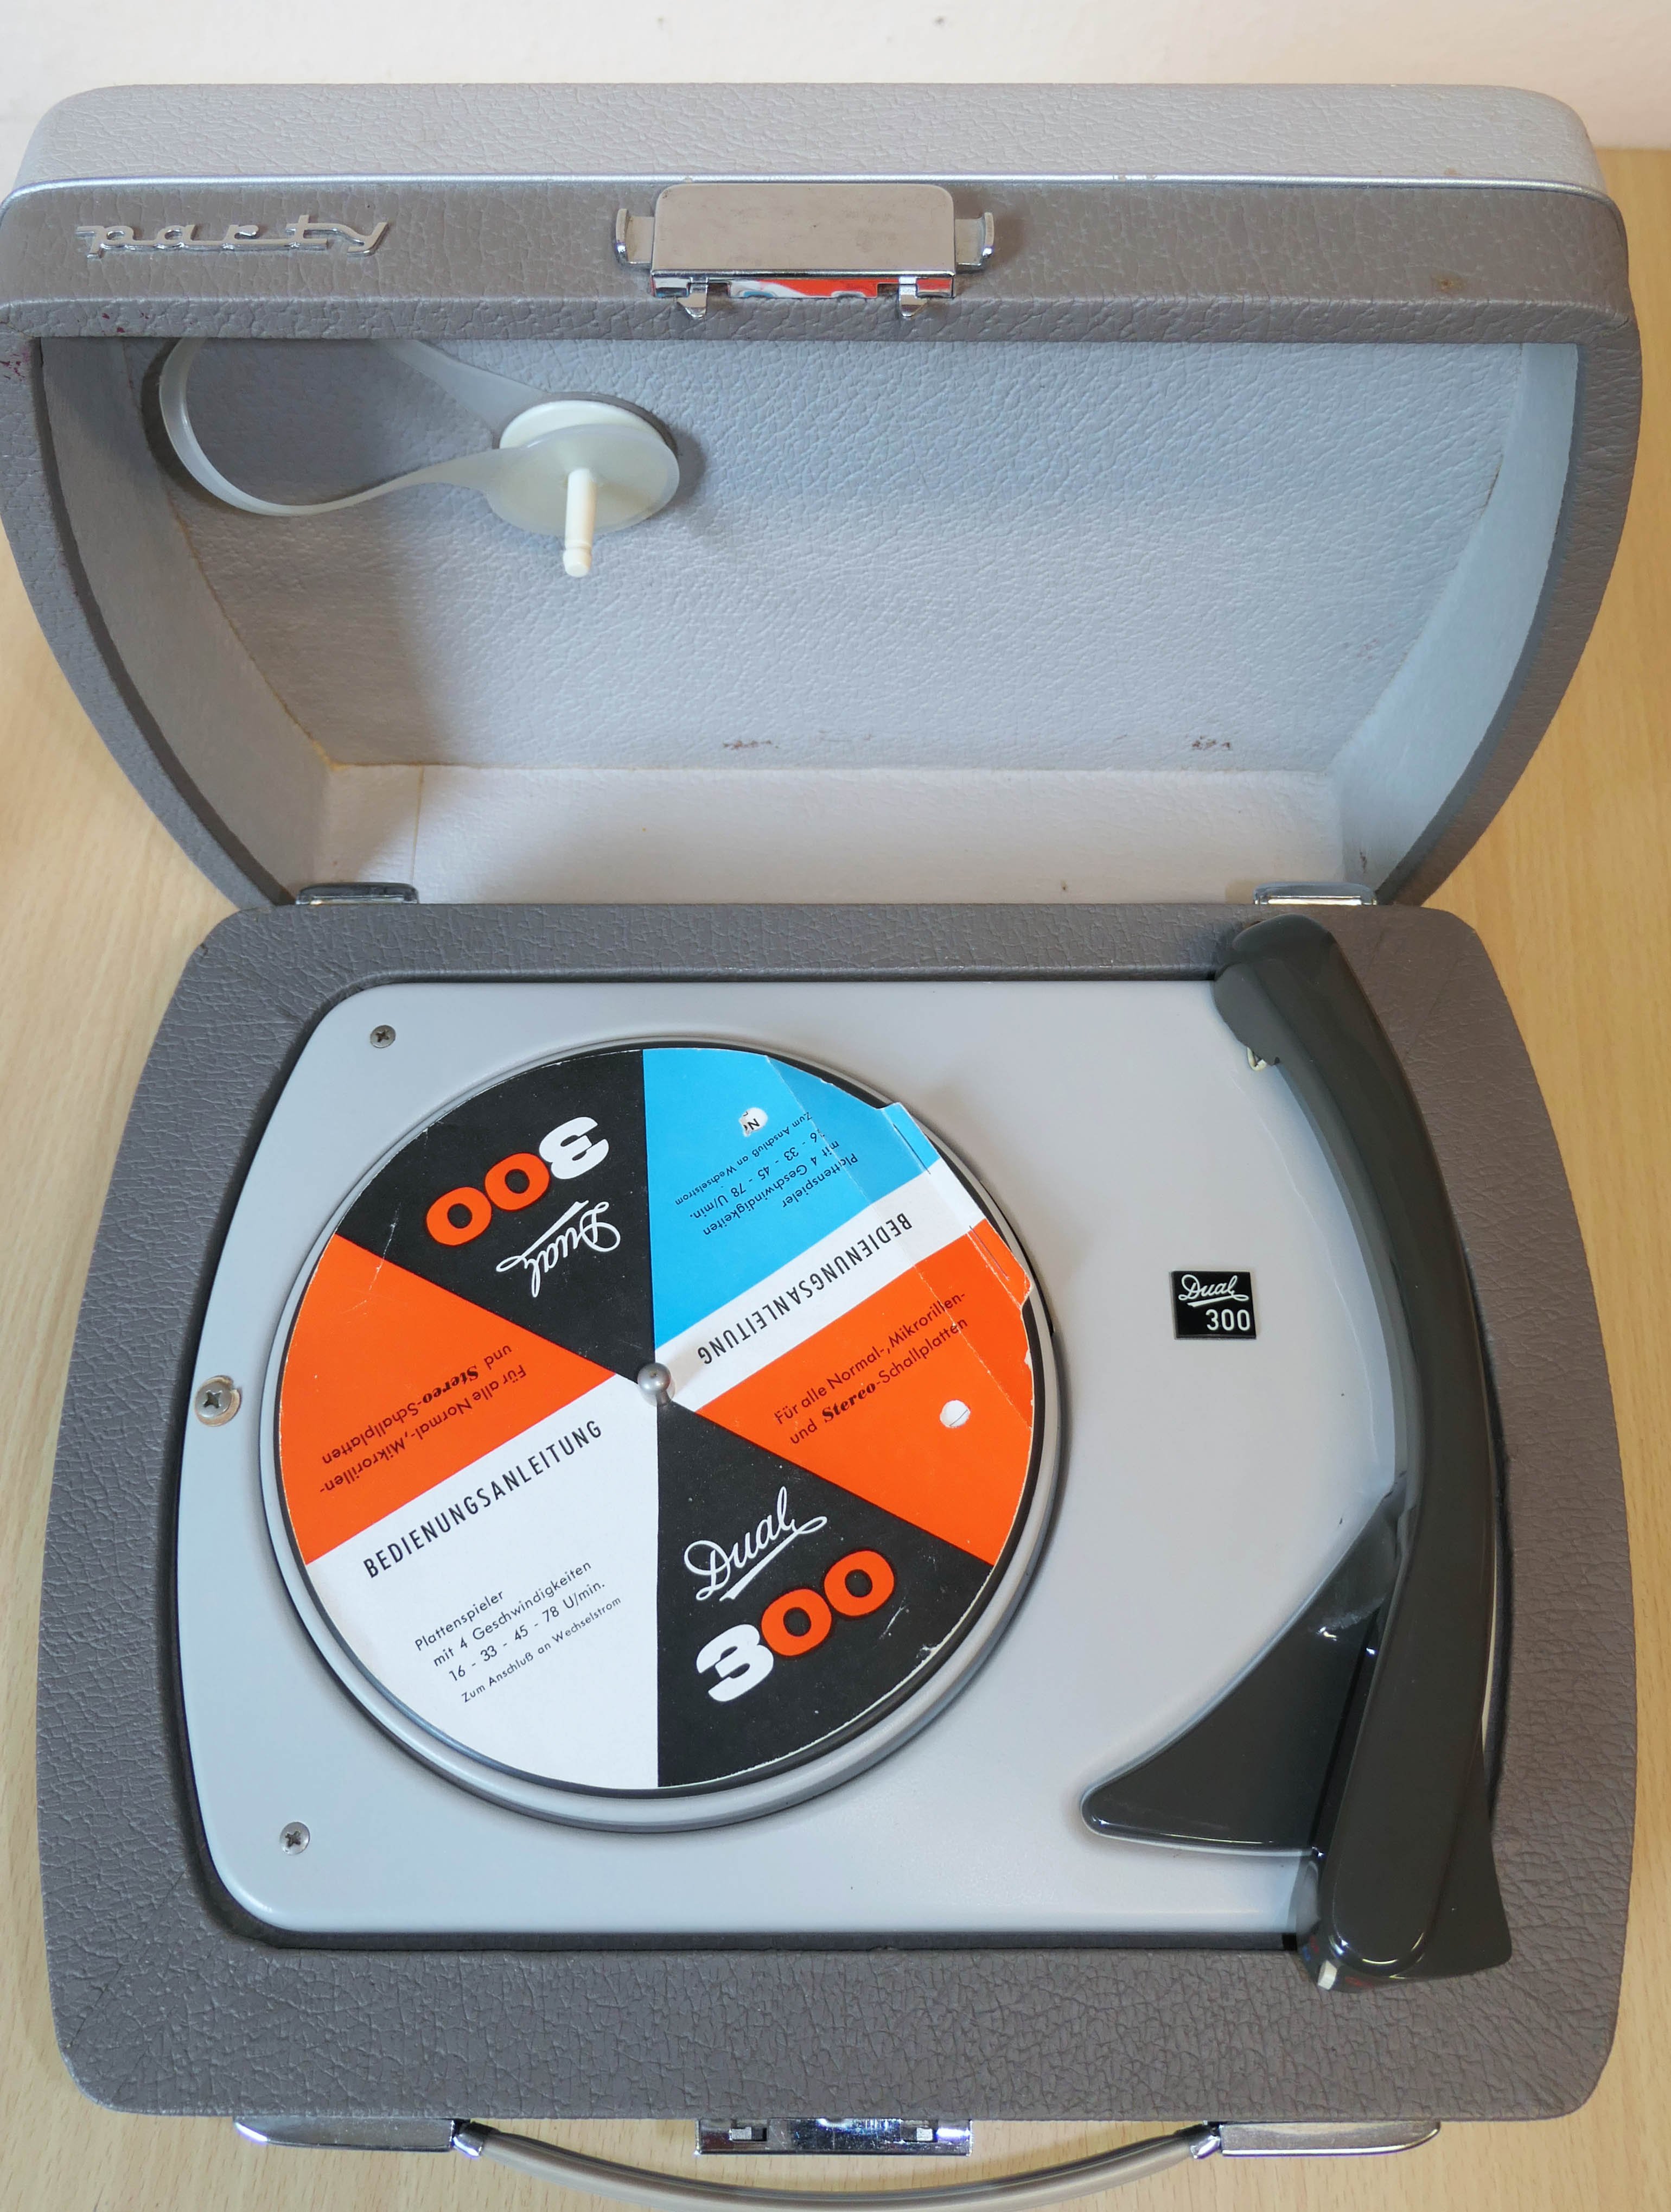 Dual Plattenspieler Dp 300 g (museum comp:ex CC BY-NC-SA)